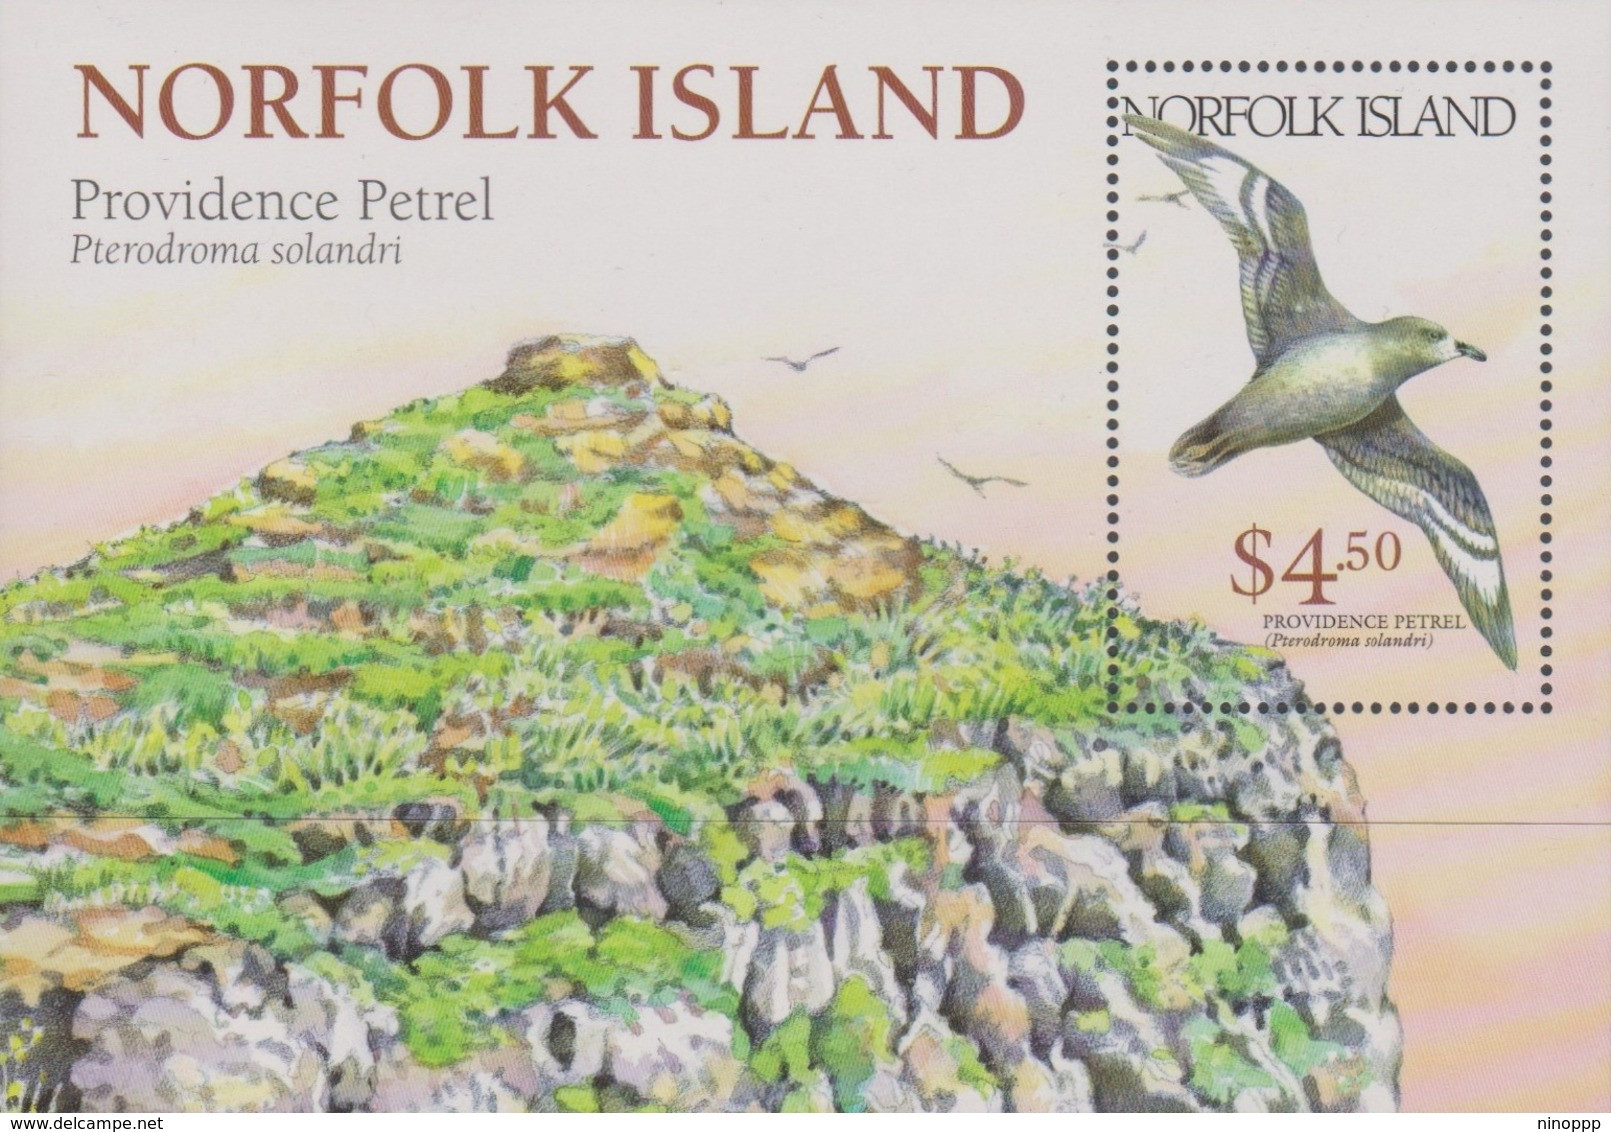 Norfolk Island ASC 689 MS 1999 Providence Petrel, Miniature Sheet, Mint Never Hinged - Isola Norfolk